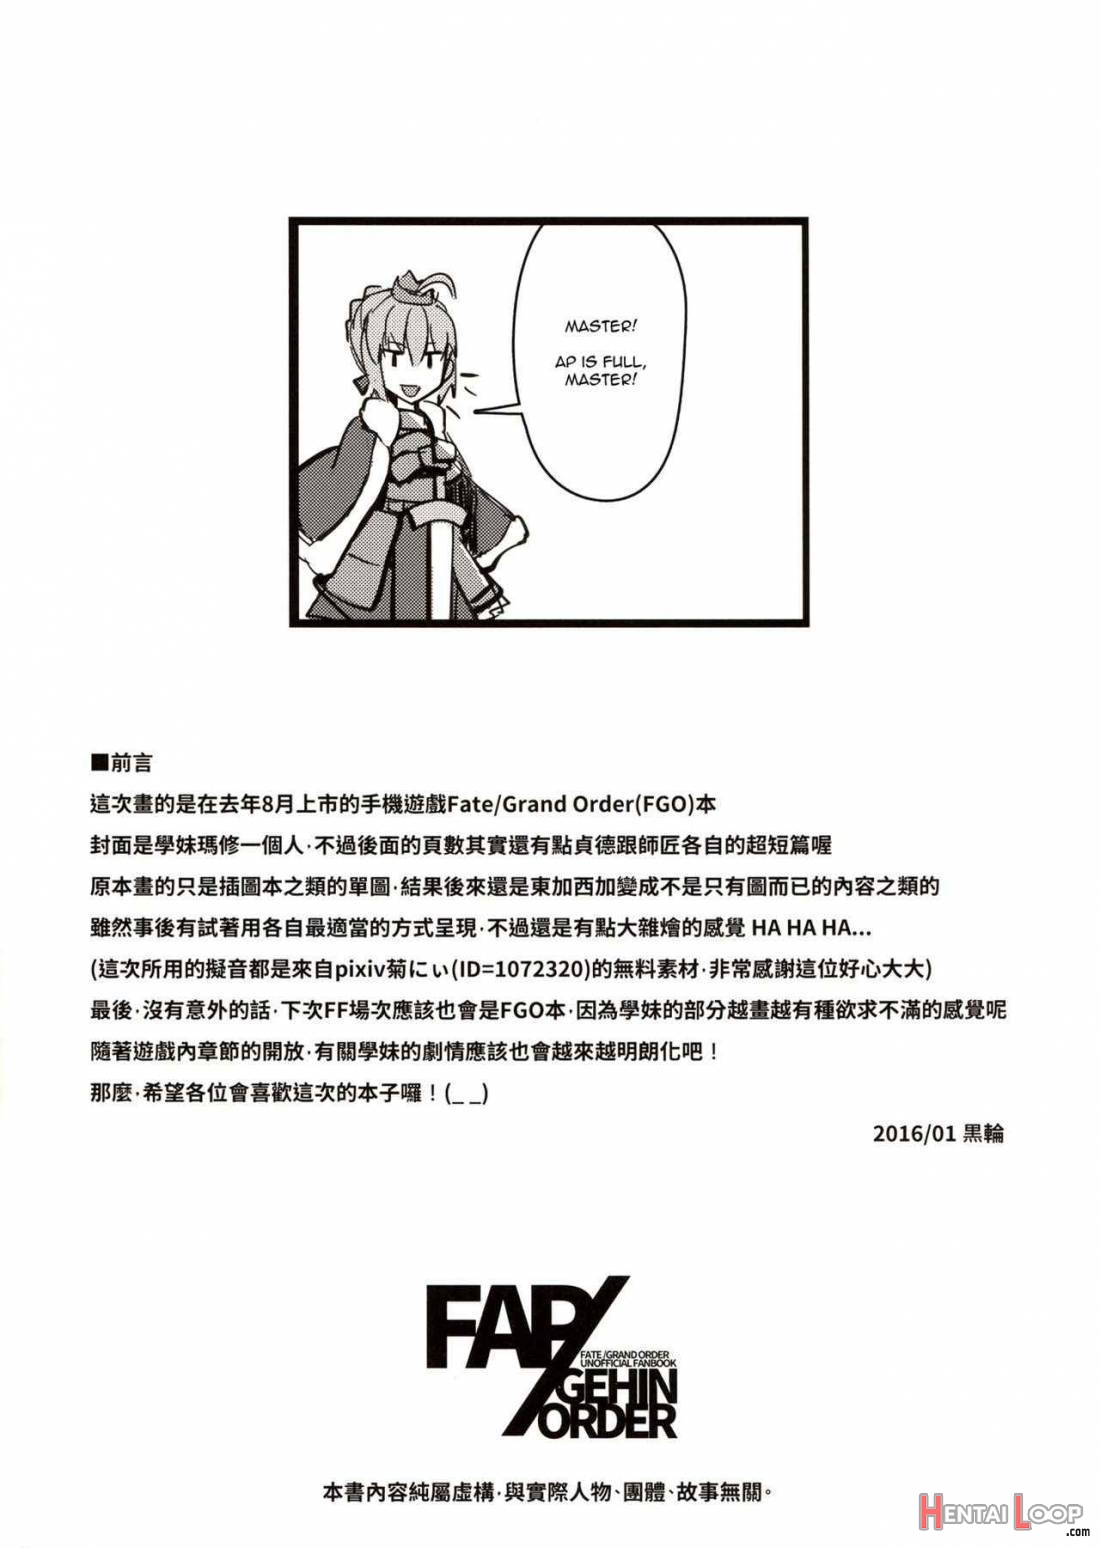 FAP/GEHIN ORDER page 2